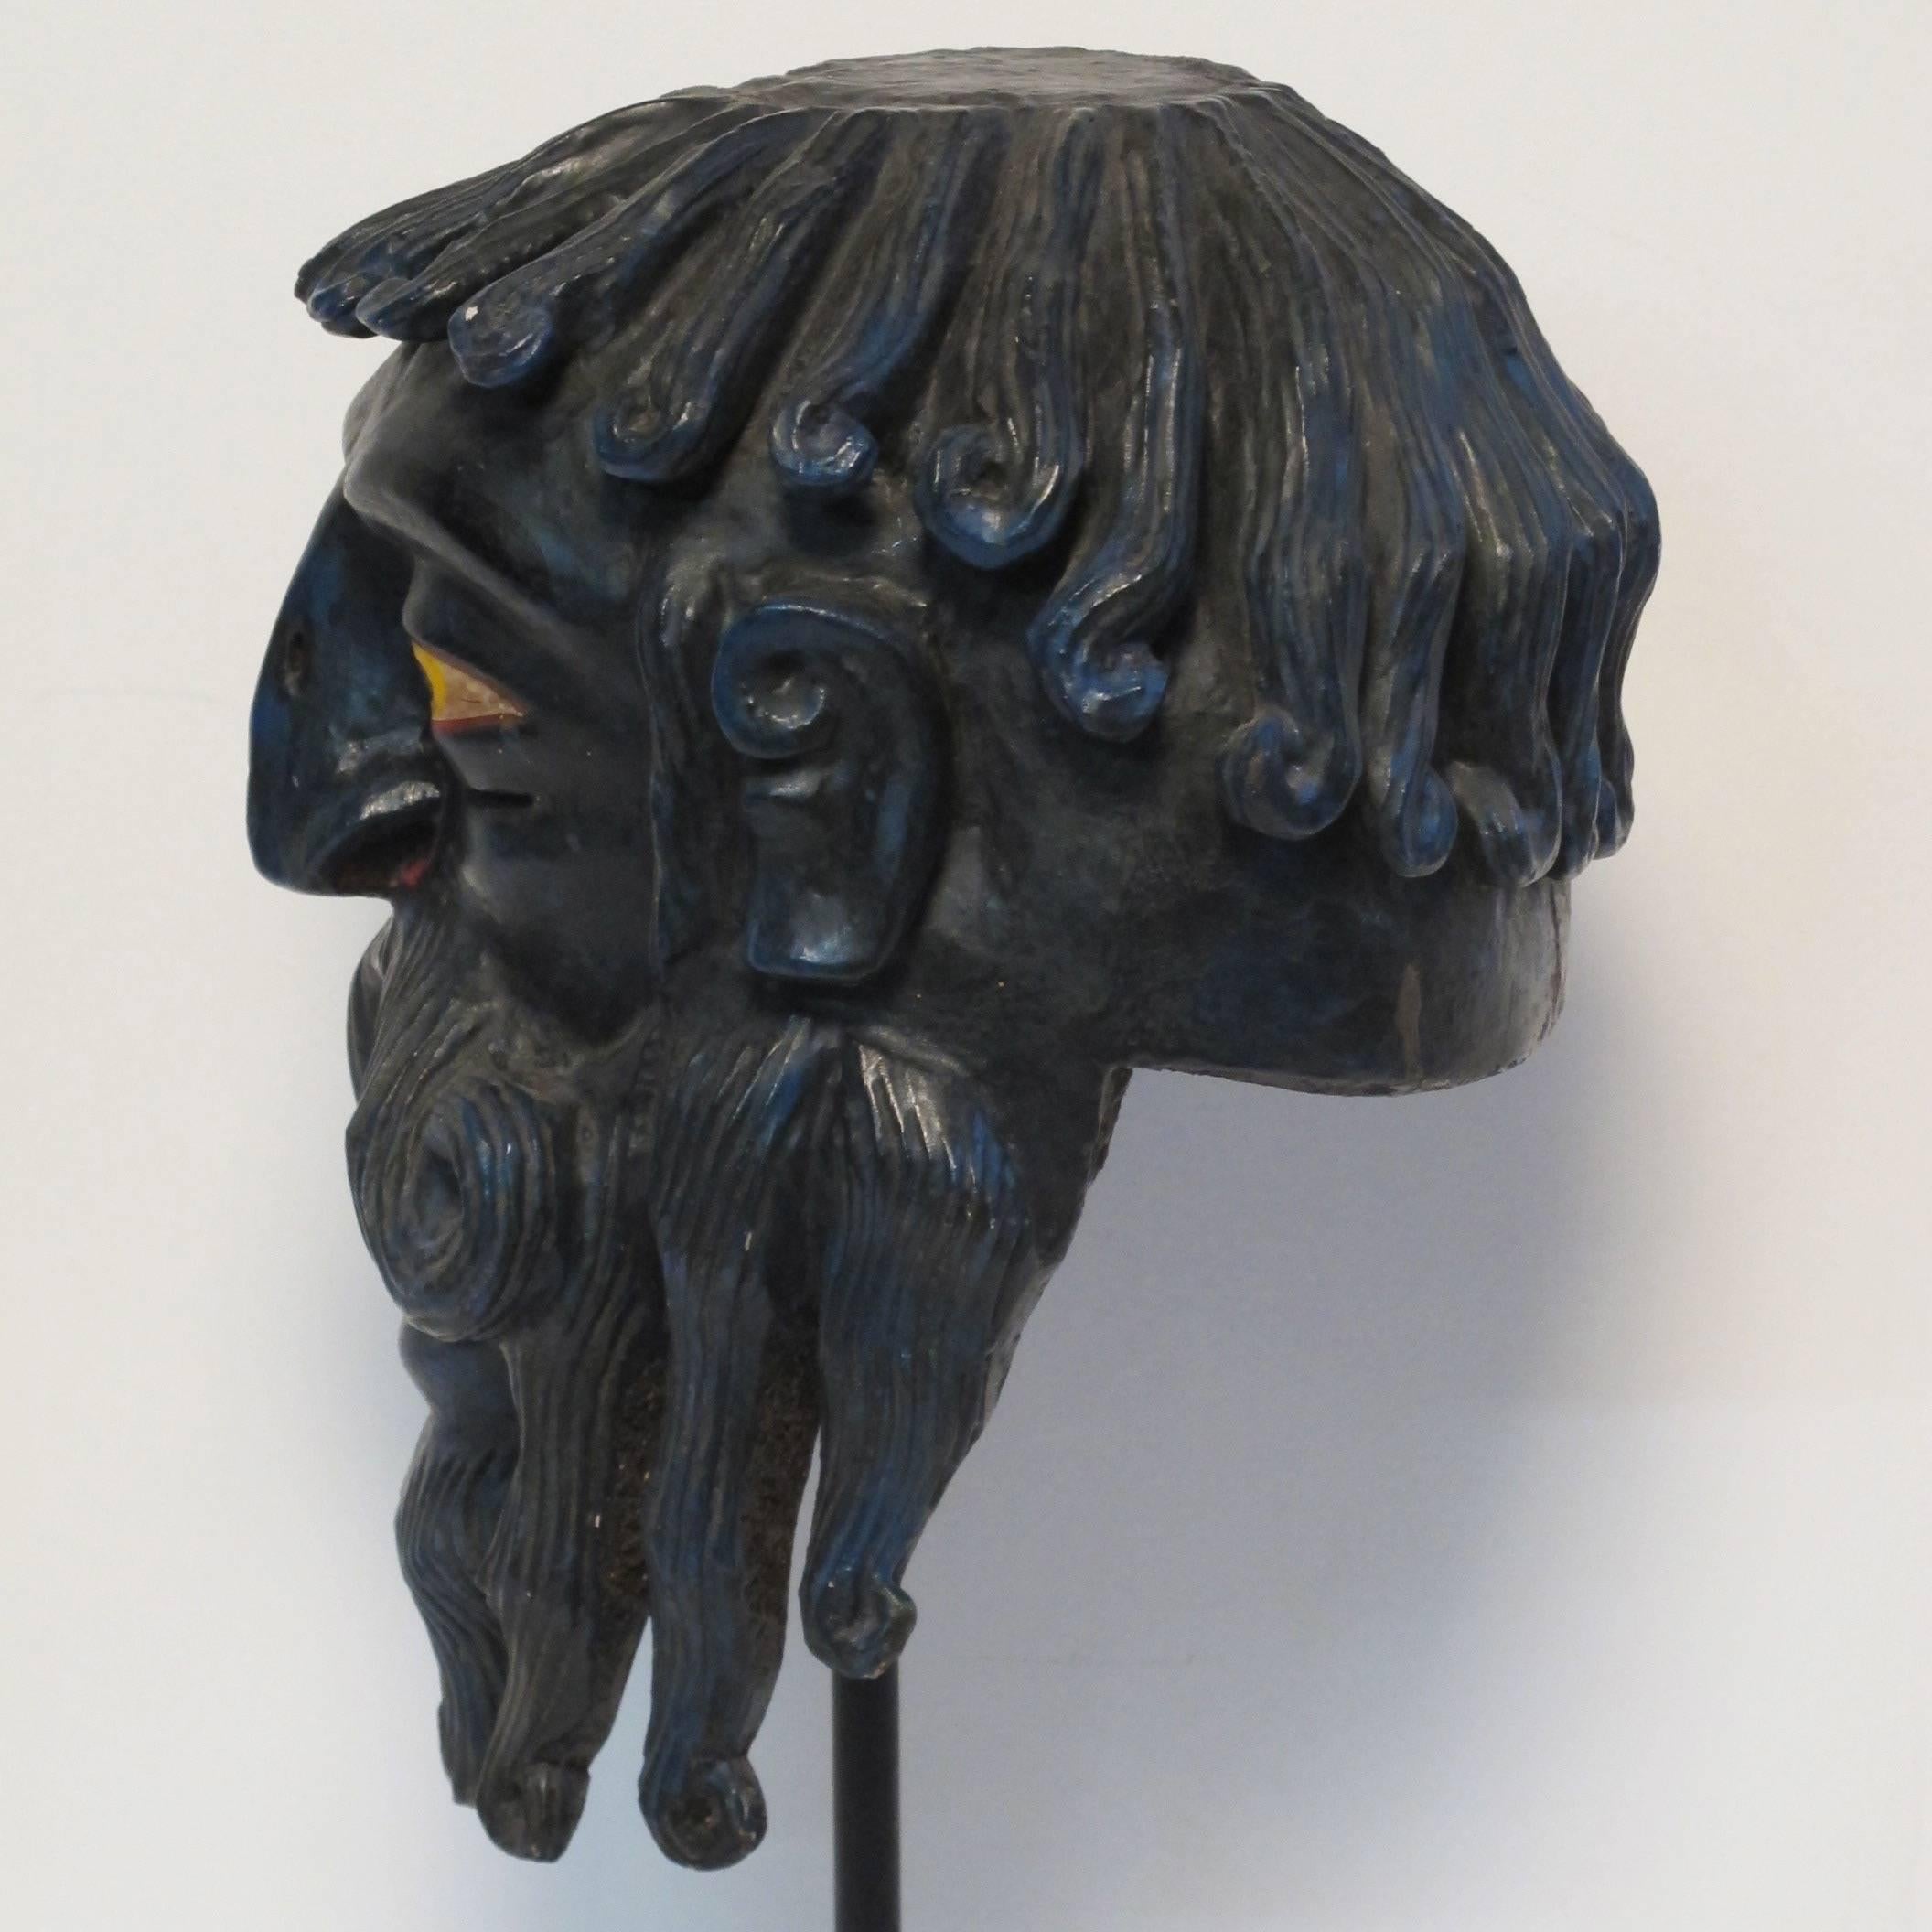 Wood Mexican Helmut Mask of Poseidon